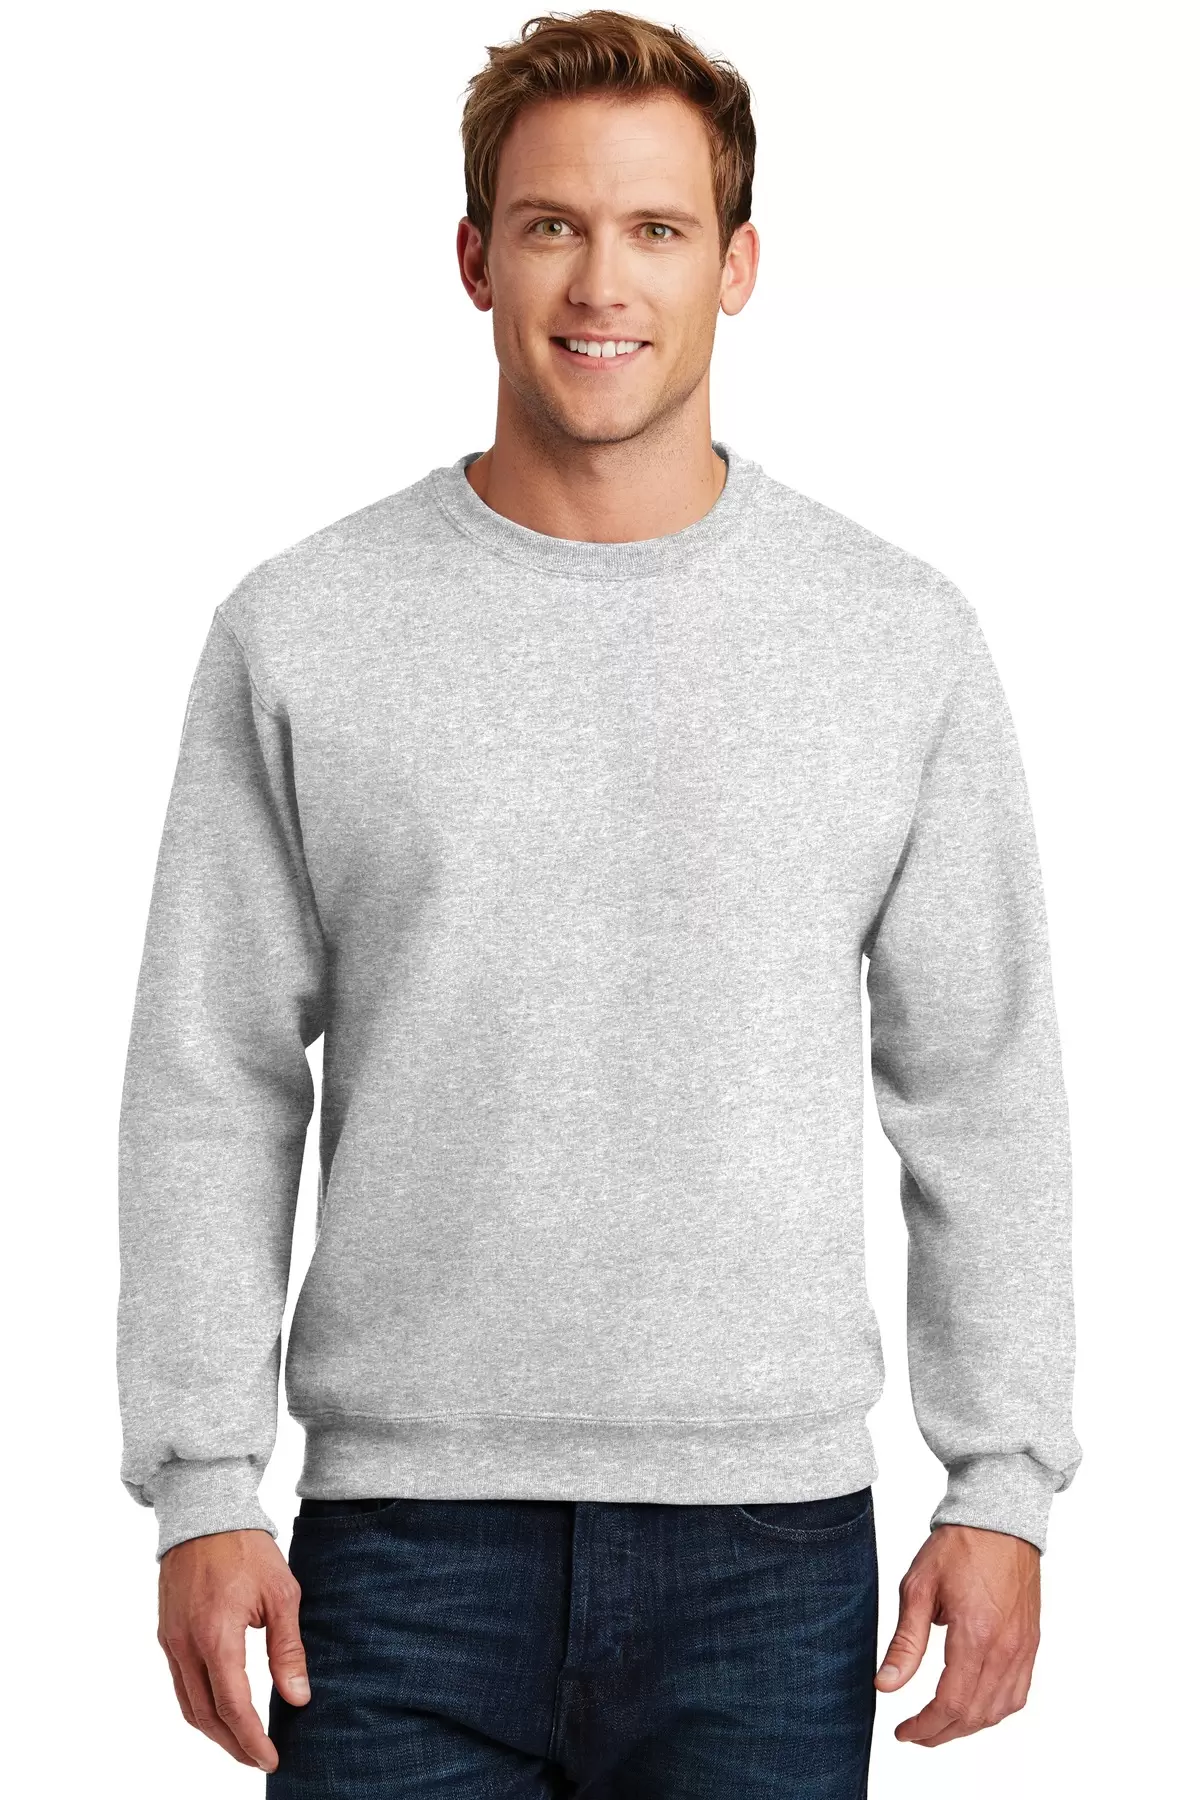 4662 Jerzees Adult Super Sweats® Crewneck Sweatshirt - From $12.28